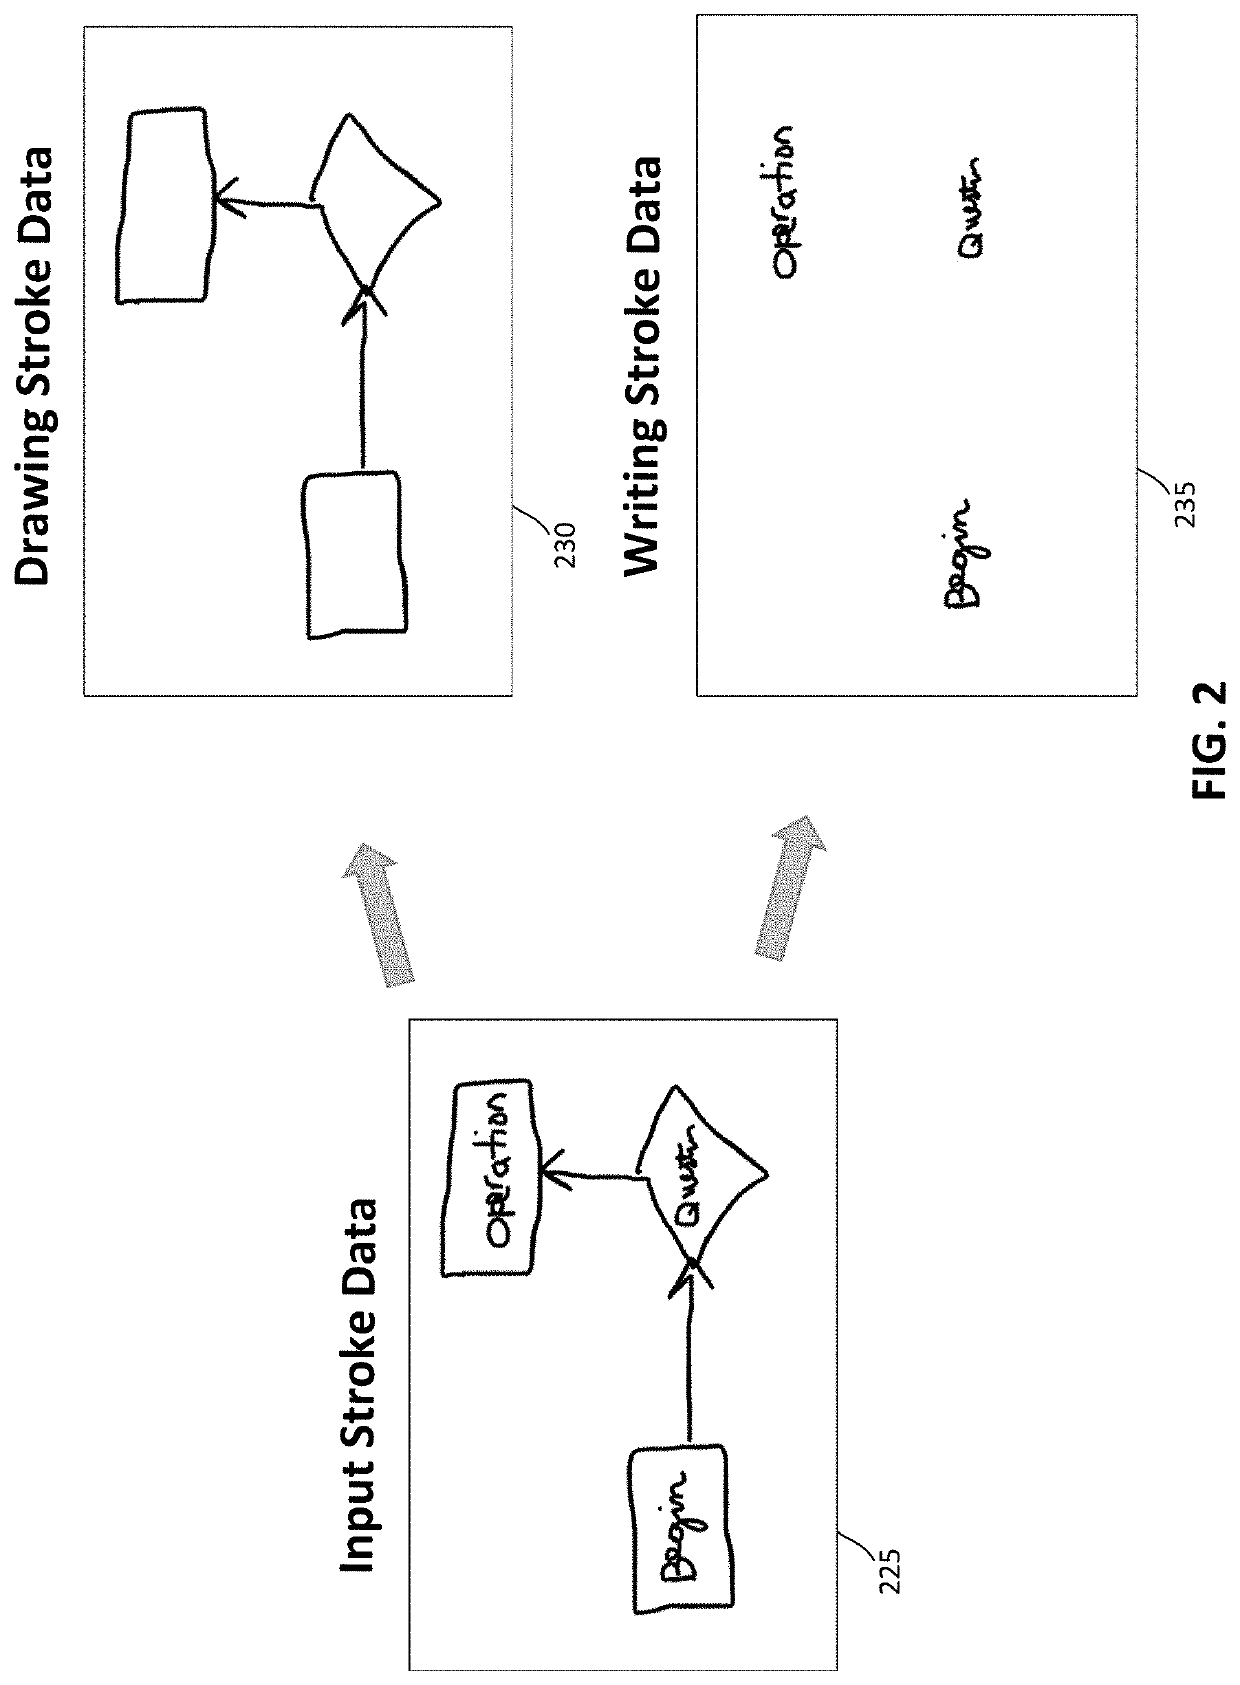 Semantic Segmentation for Stroke Classification in Inking Application